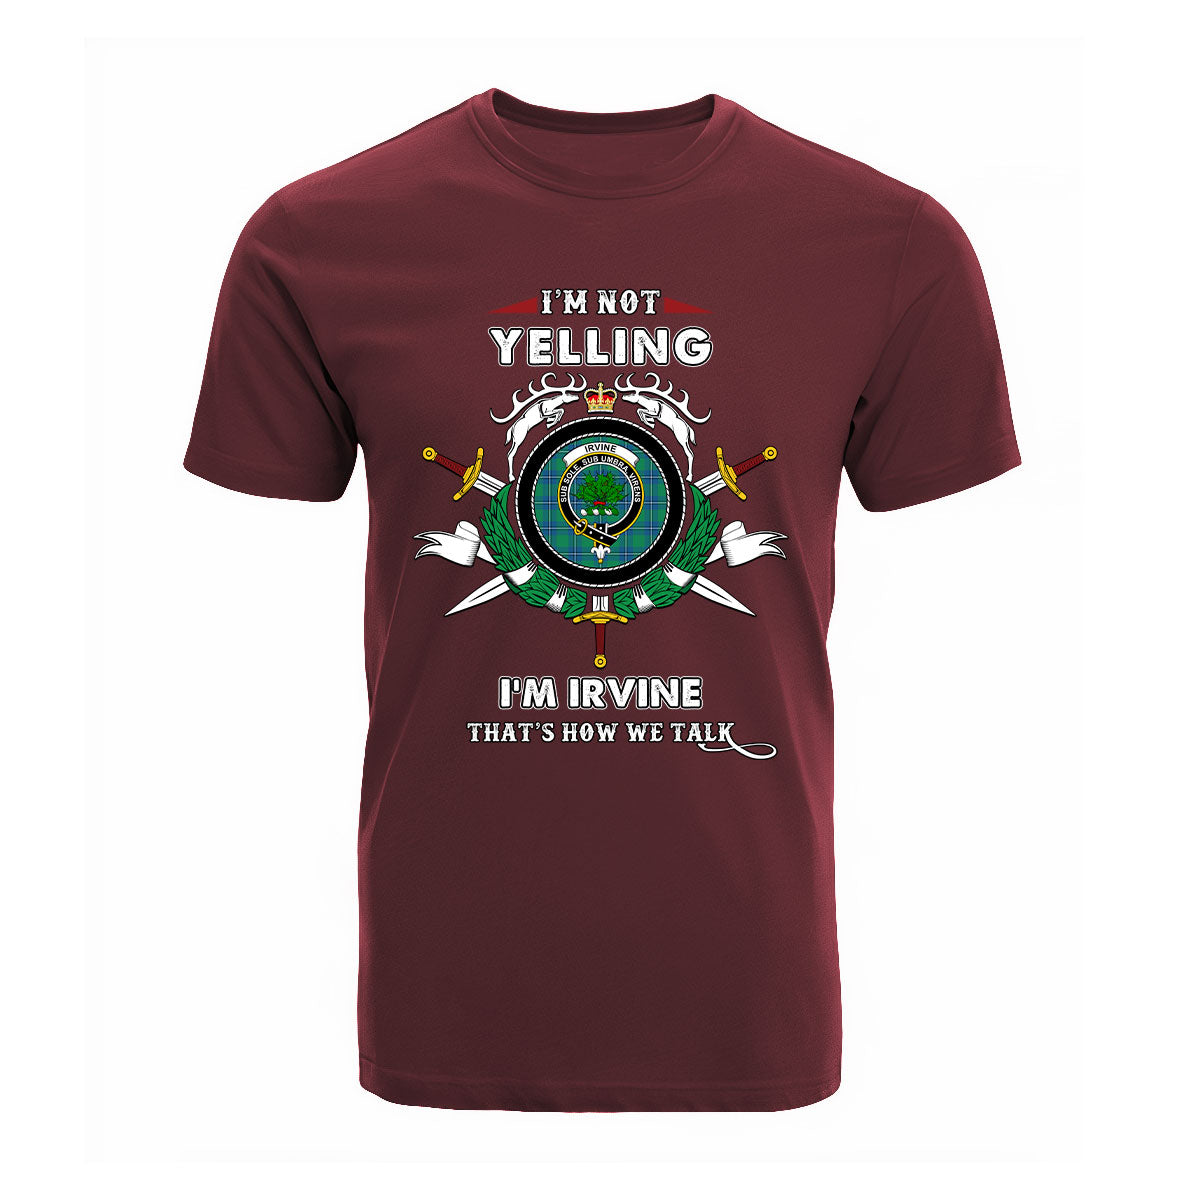 Irvine Tartan Crest T-shirt - I'm not yelling style